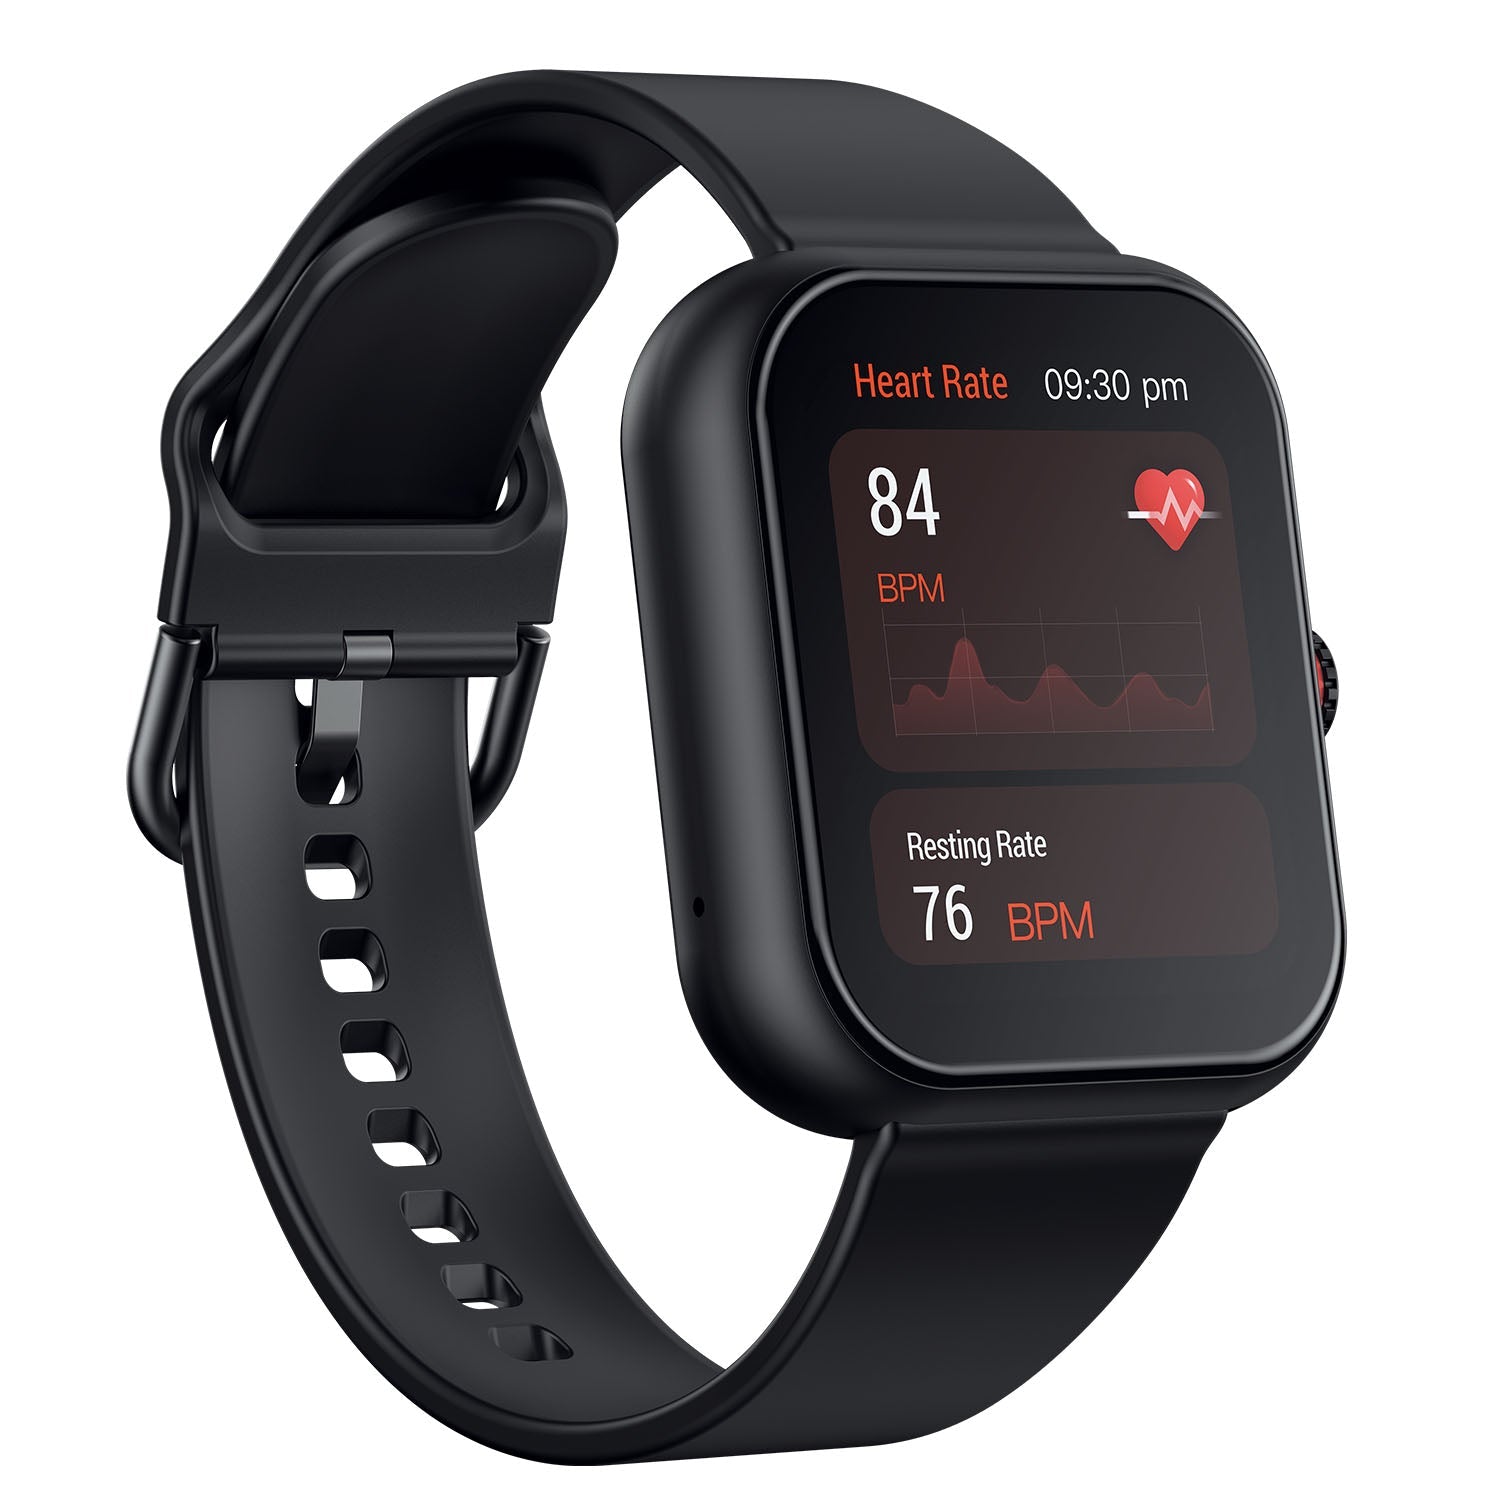 S1 zinc Smart watch showing heart rate monitor